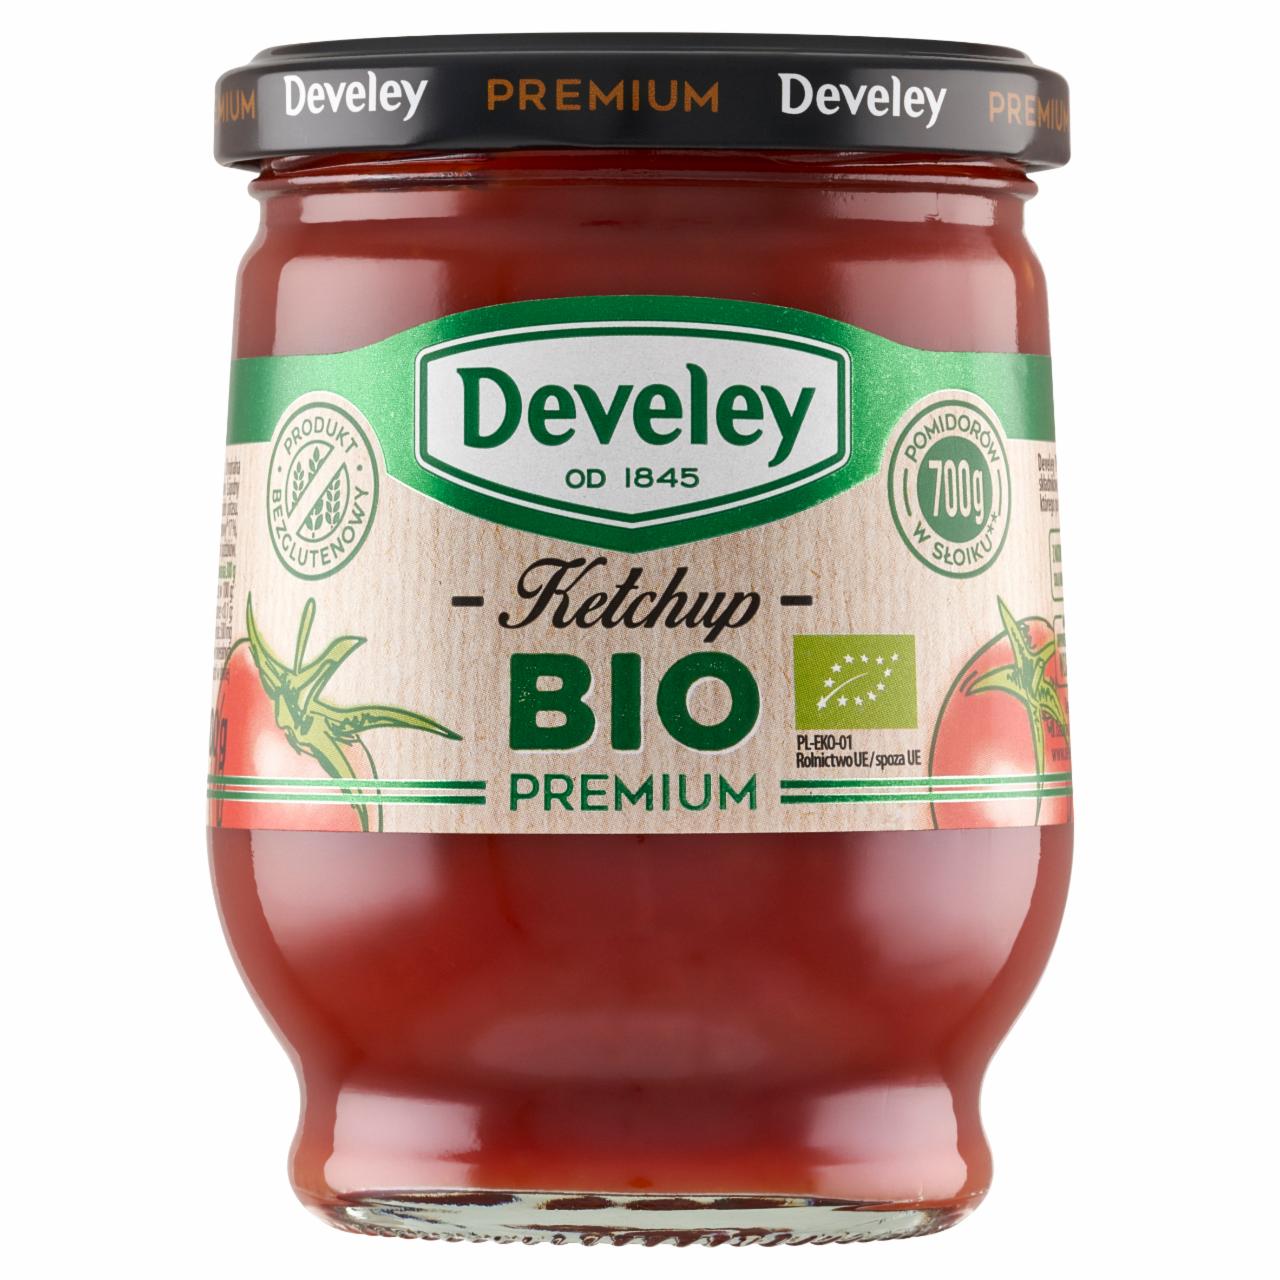 Zdjęcia - Develey Premium Ketchup bio 300 g